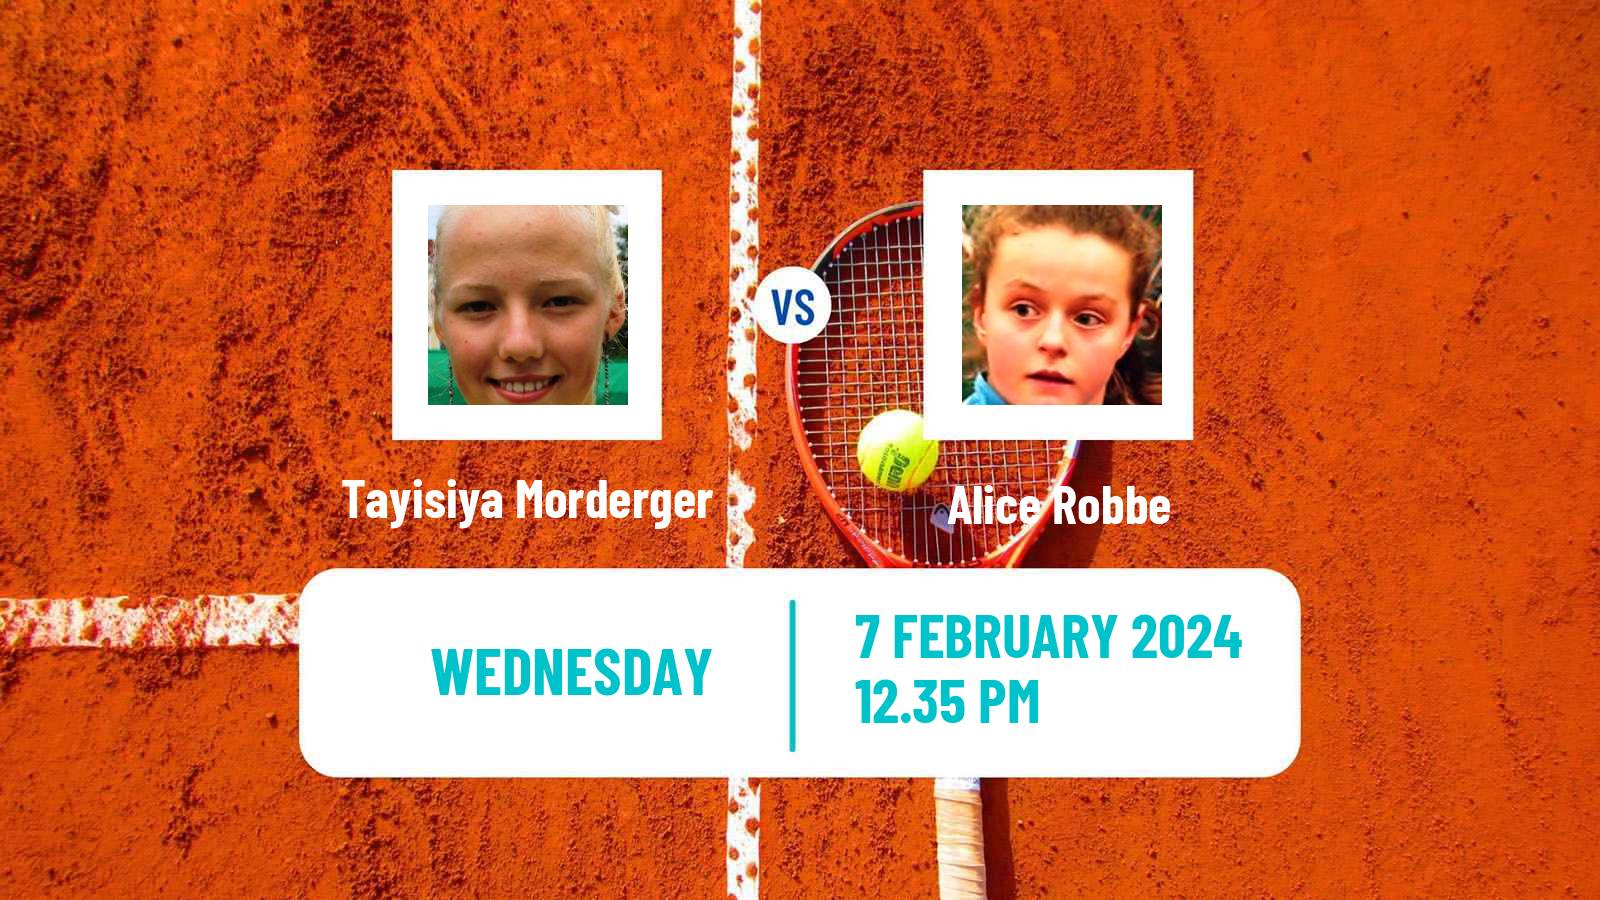 Tennis ITF W75 Grenoble Women Tayisiya Morderger - Alice Robbe